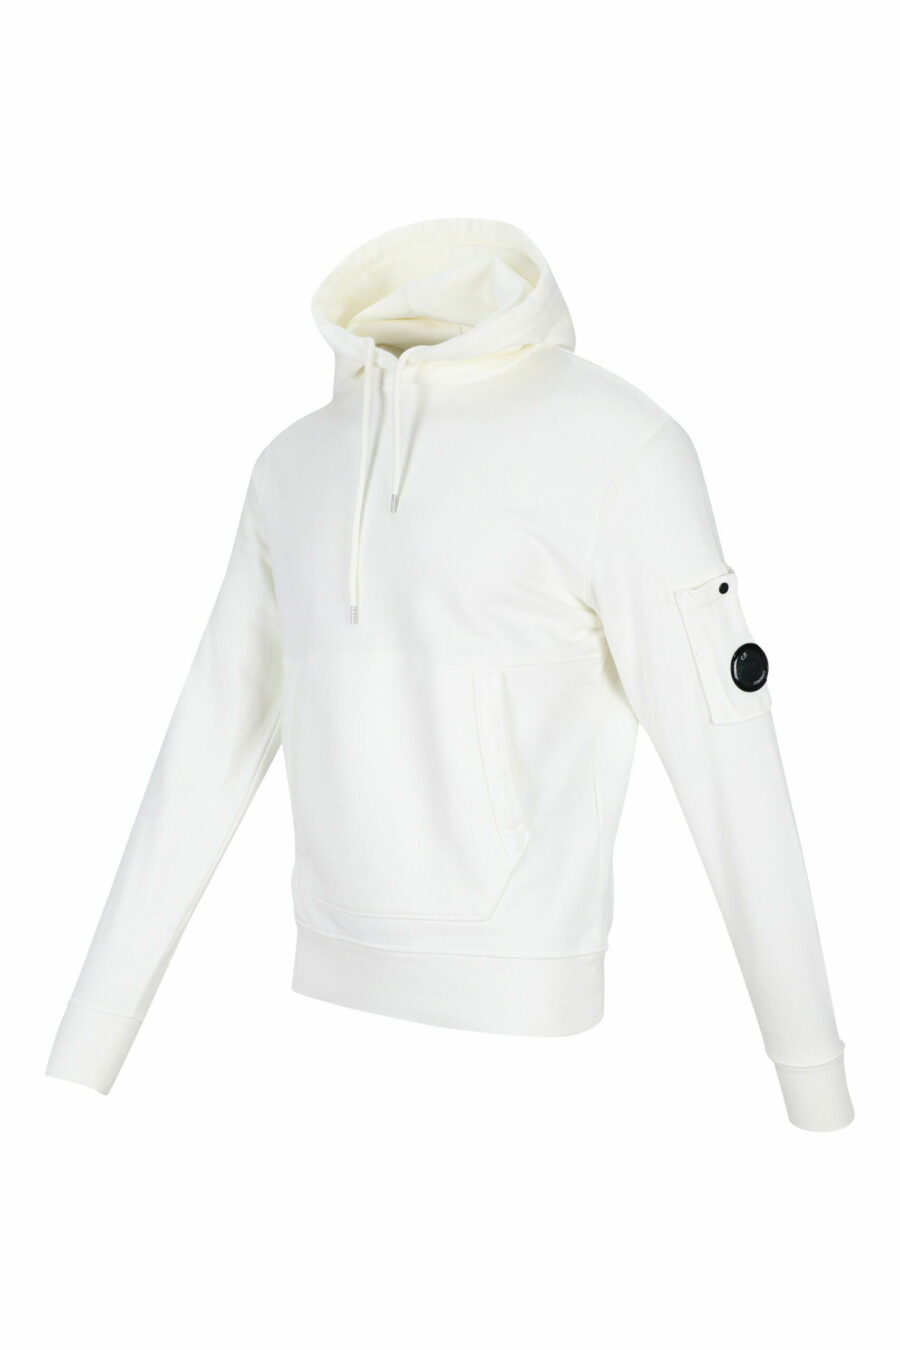 Sweat à capuche blanc avec logo latéral - 7620943597783 1 scaled